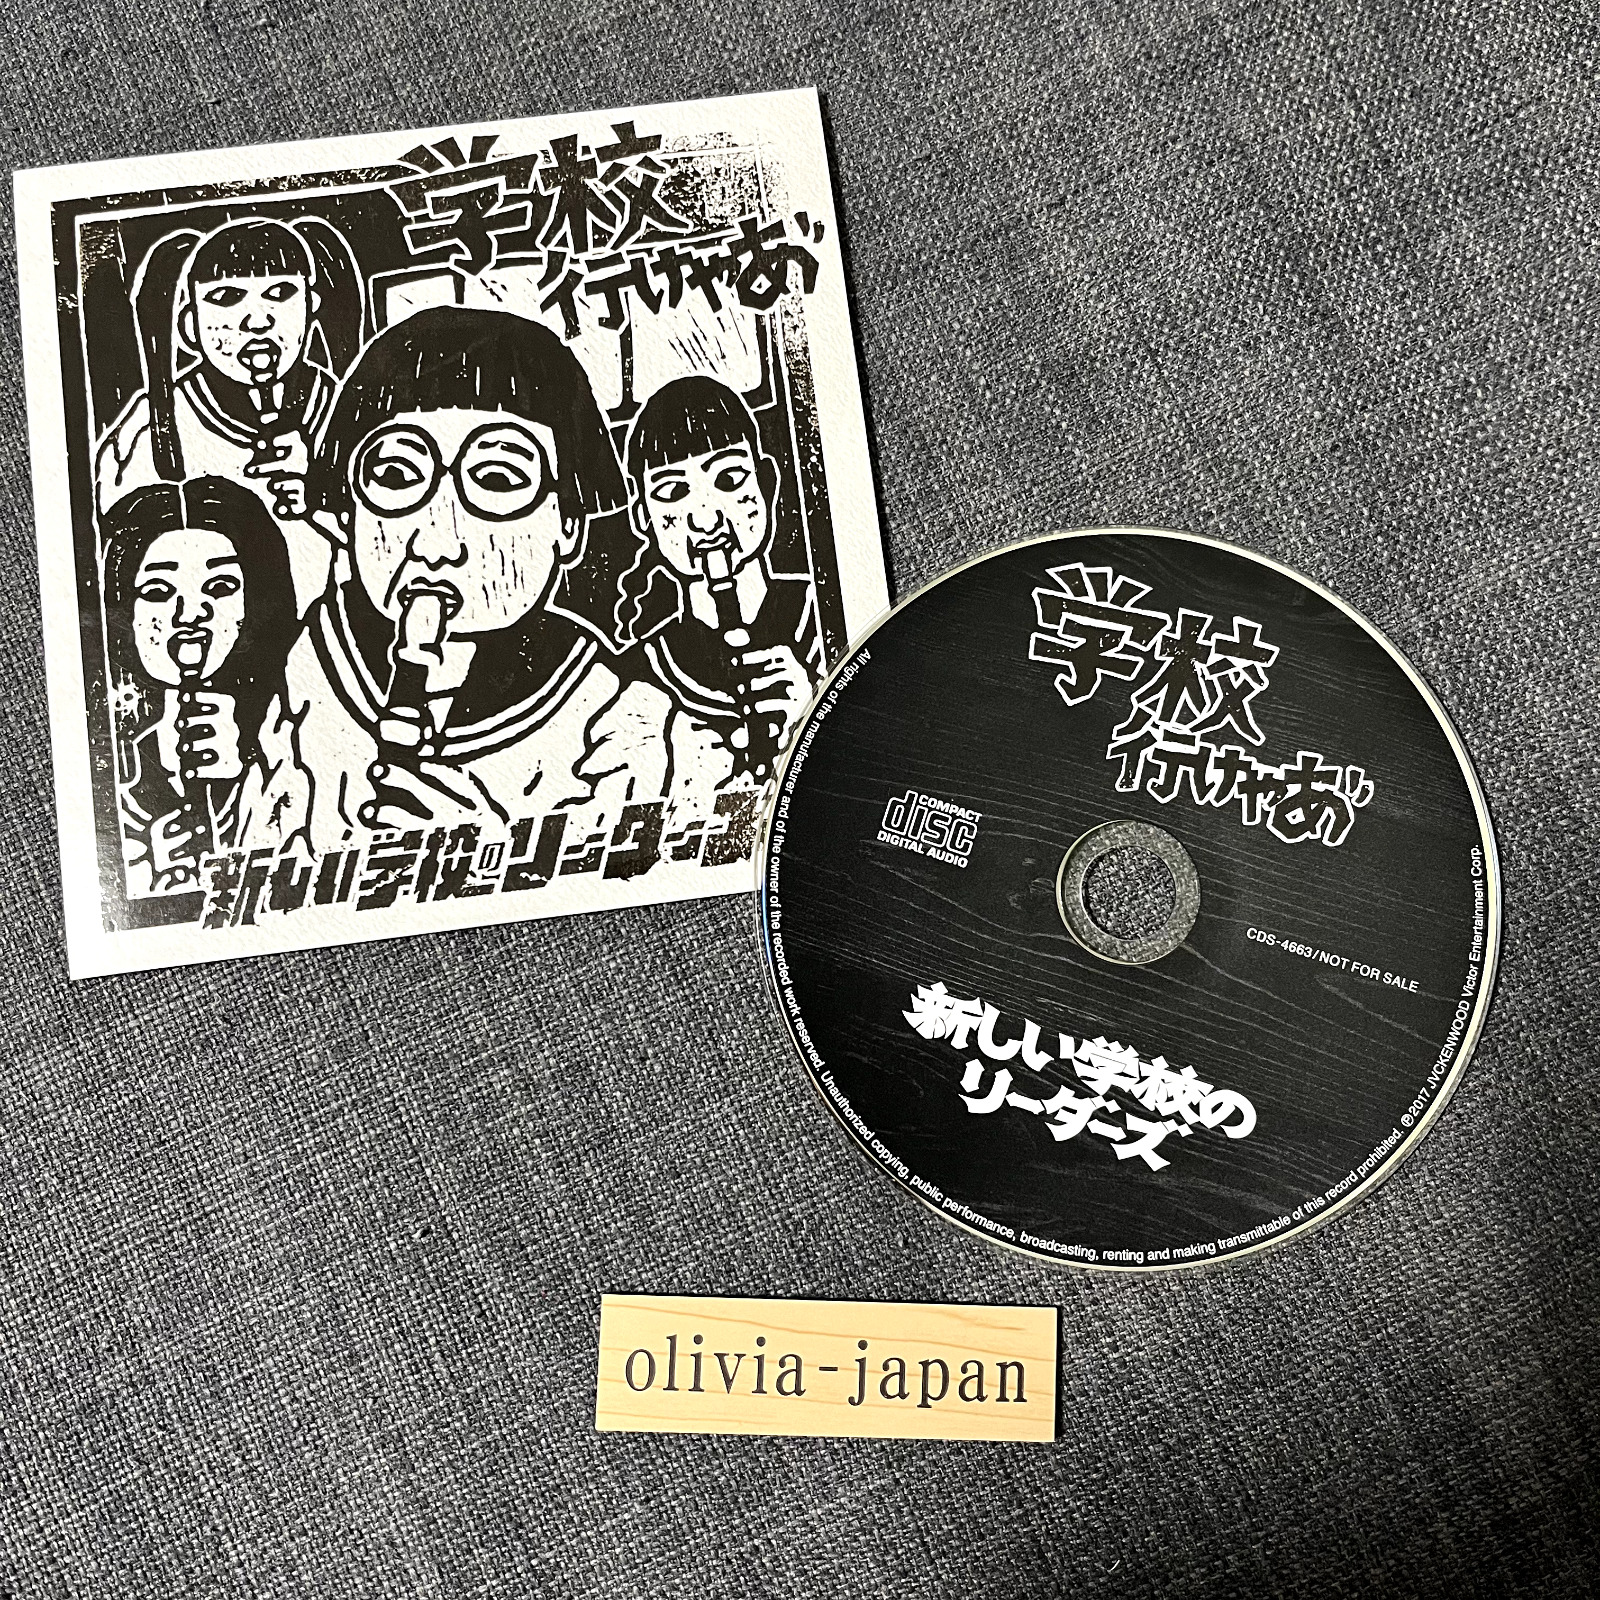 Atarashii Gakko Not for Sale 1st Single Dokubana Purchase Bonus CD Gakko Go Y